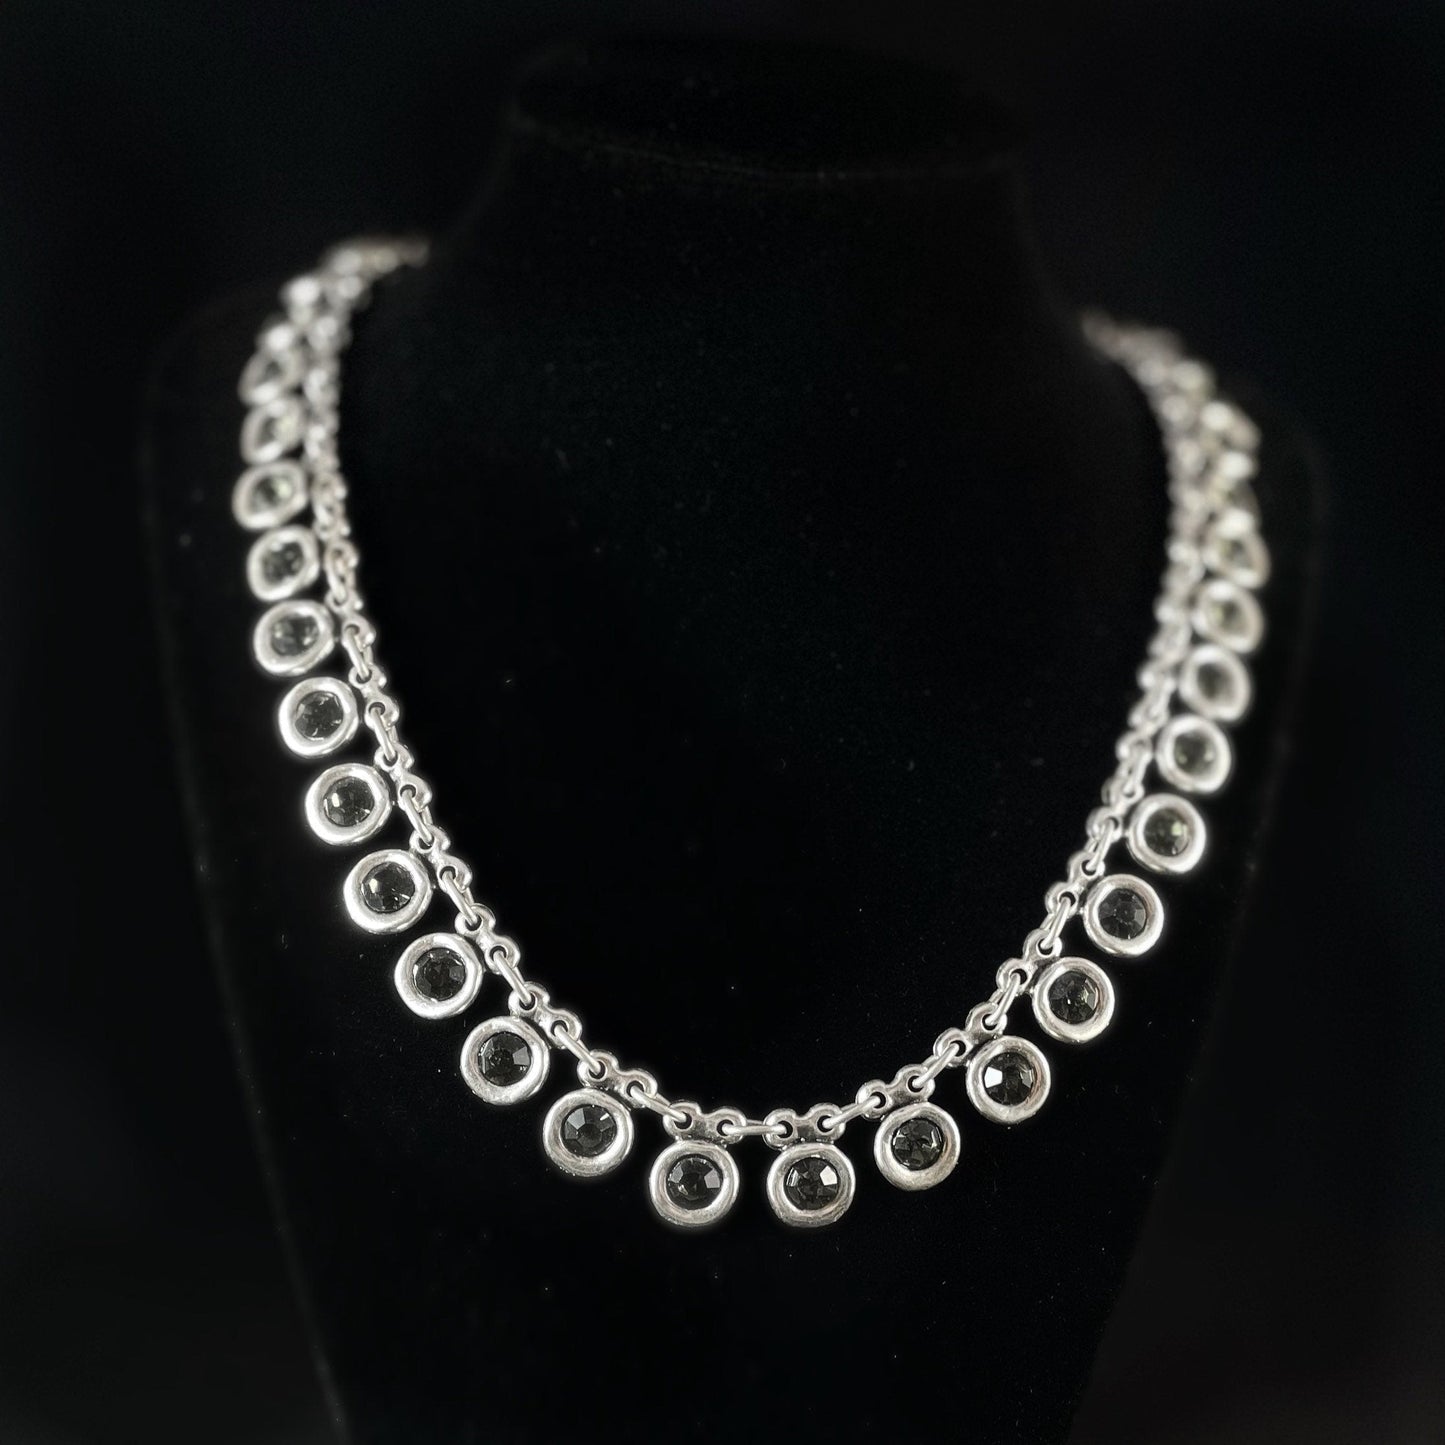 Silver Necklace with Gray Crystals, Handmade, Nickel Free